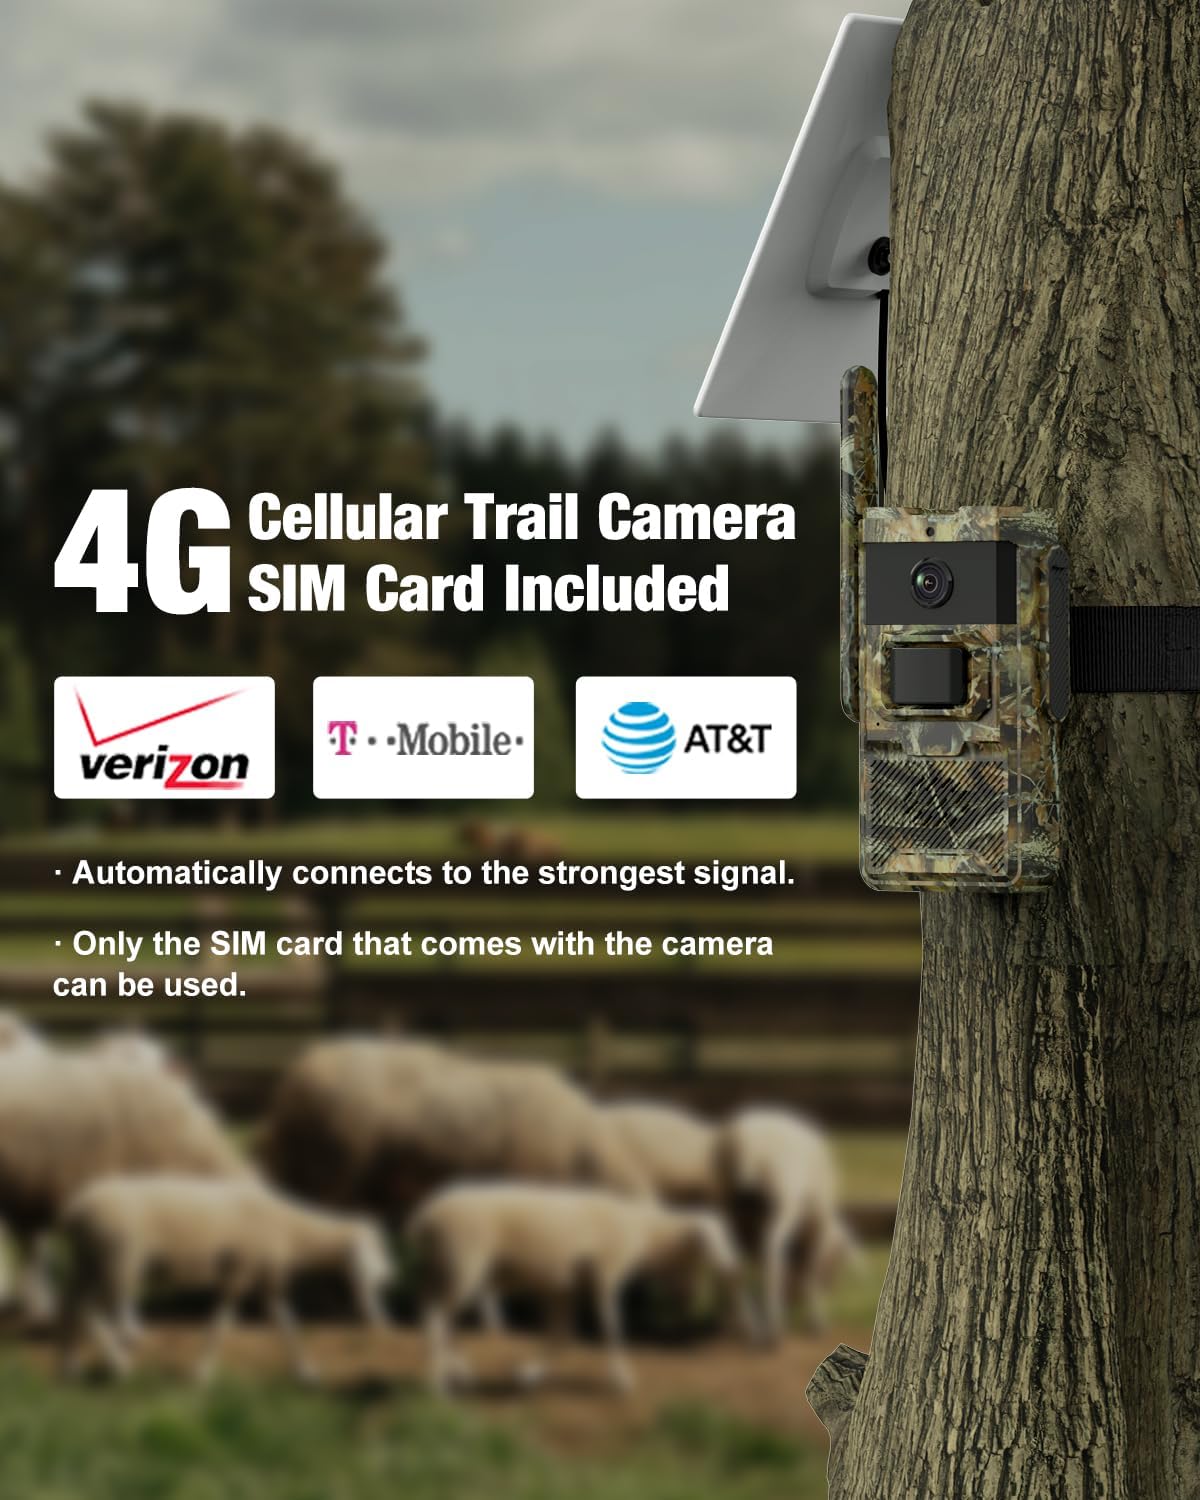 4G LTE Cellular Trail Camera Include SIM Card